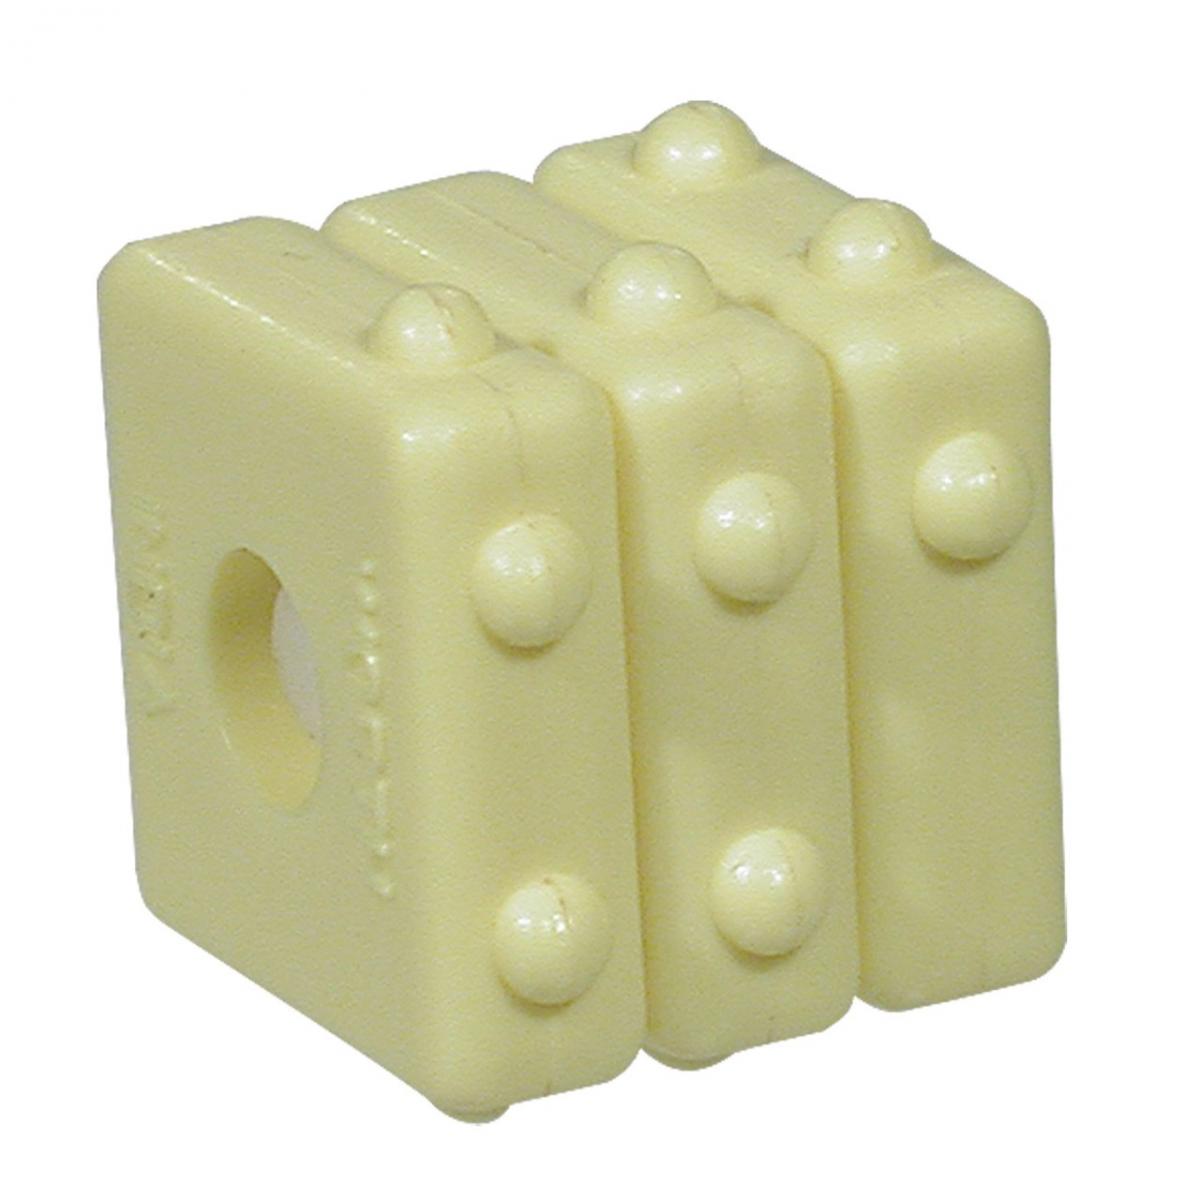 Pocket braille cube